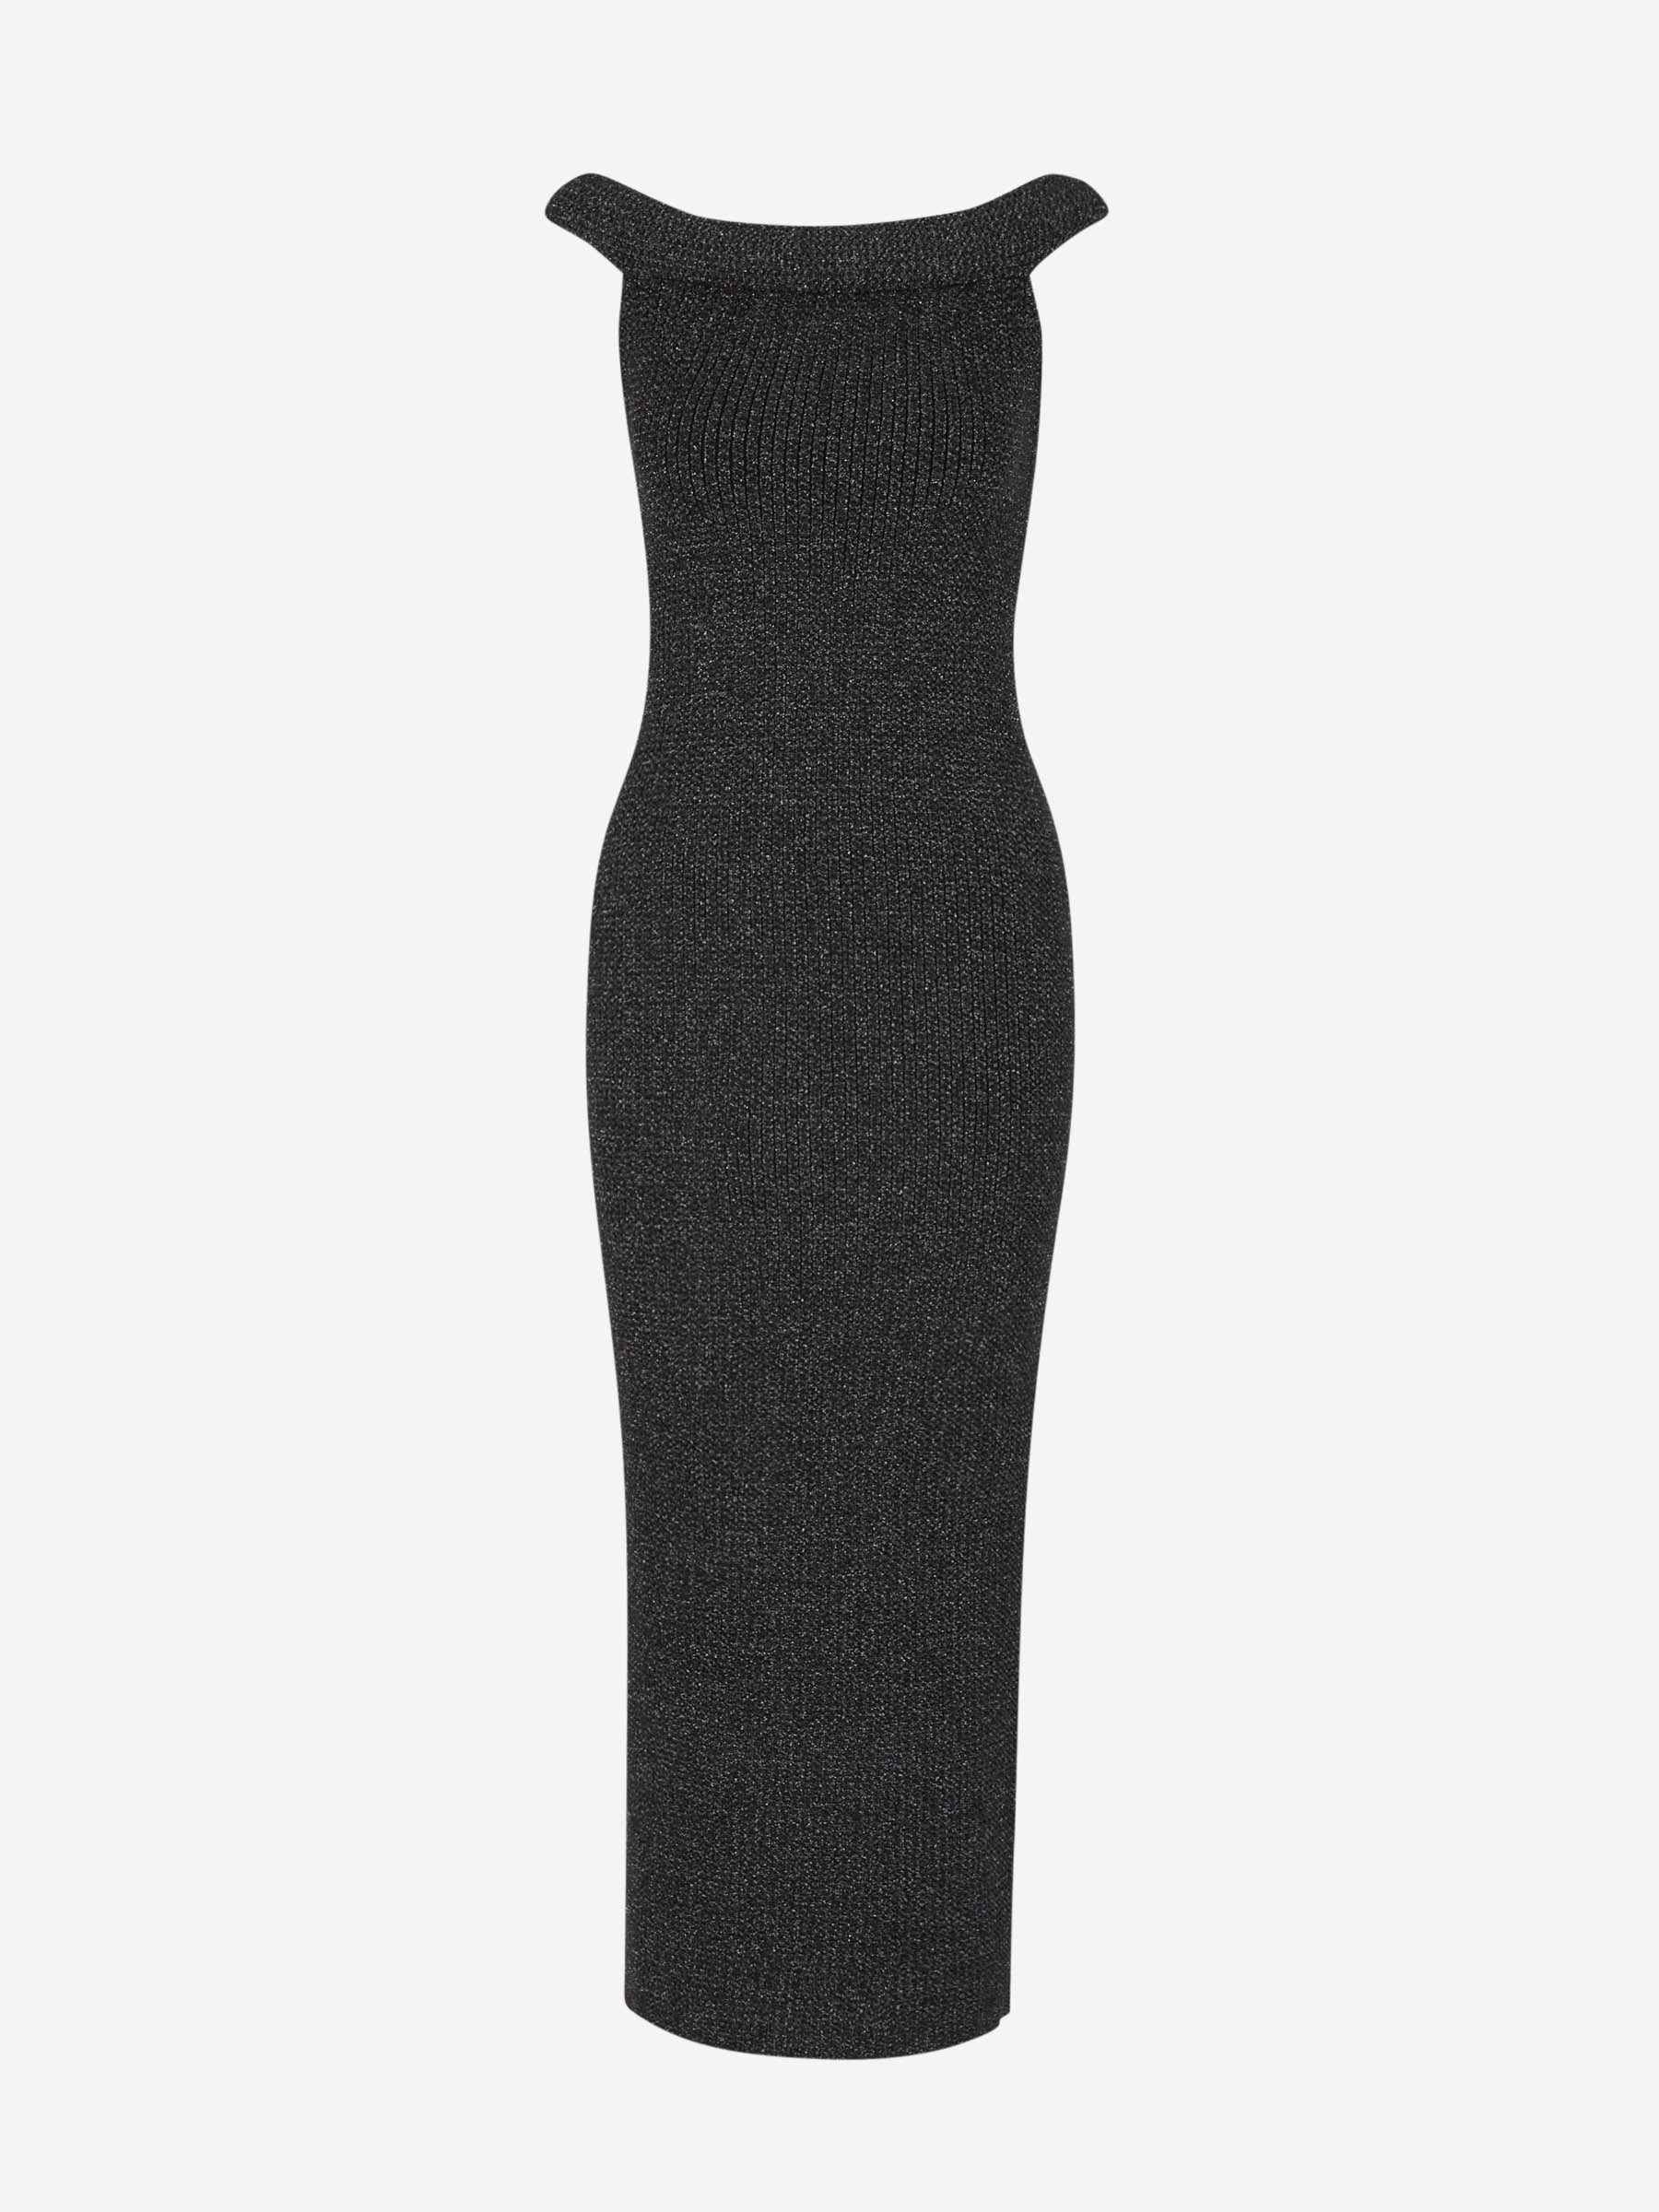 Totême Strapless Cotton-blend Midi Dress in Black